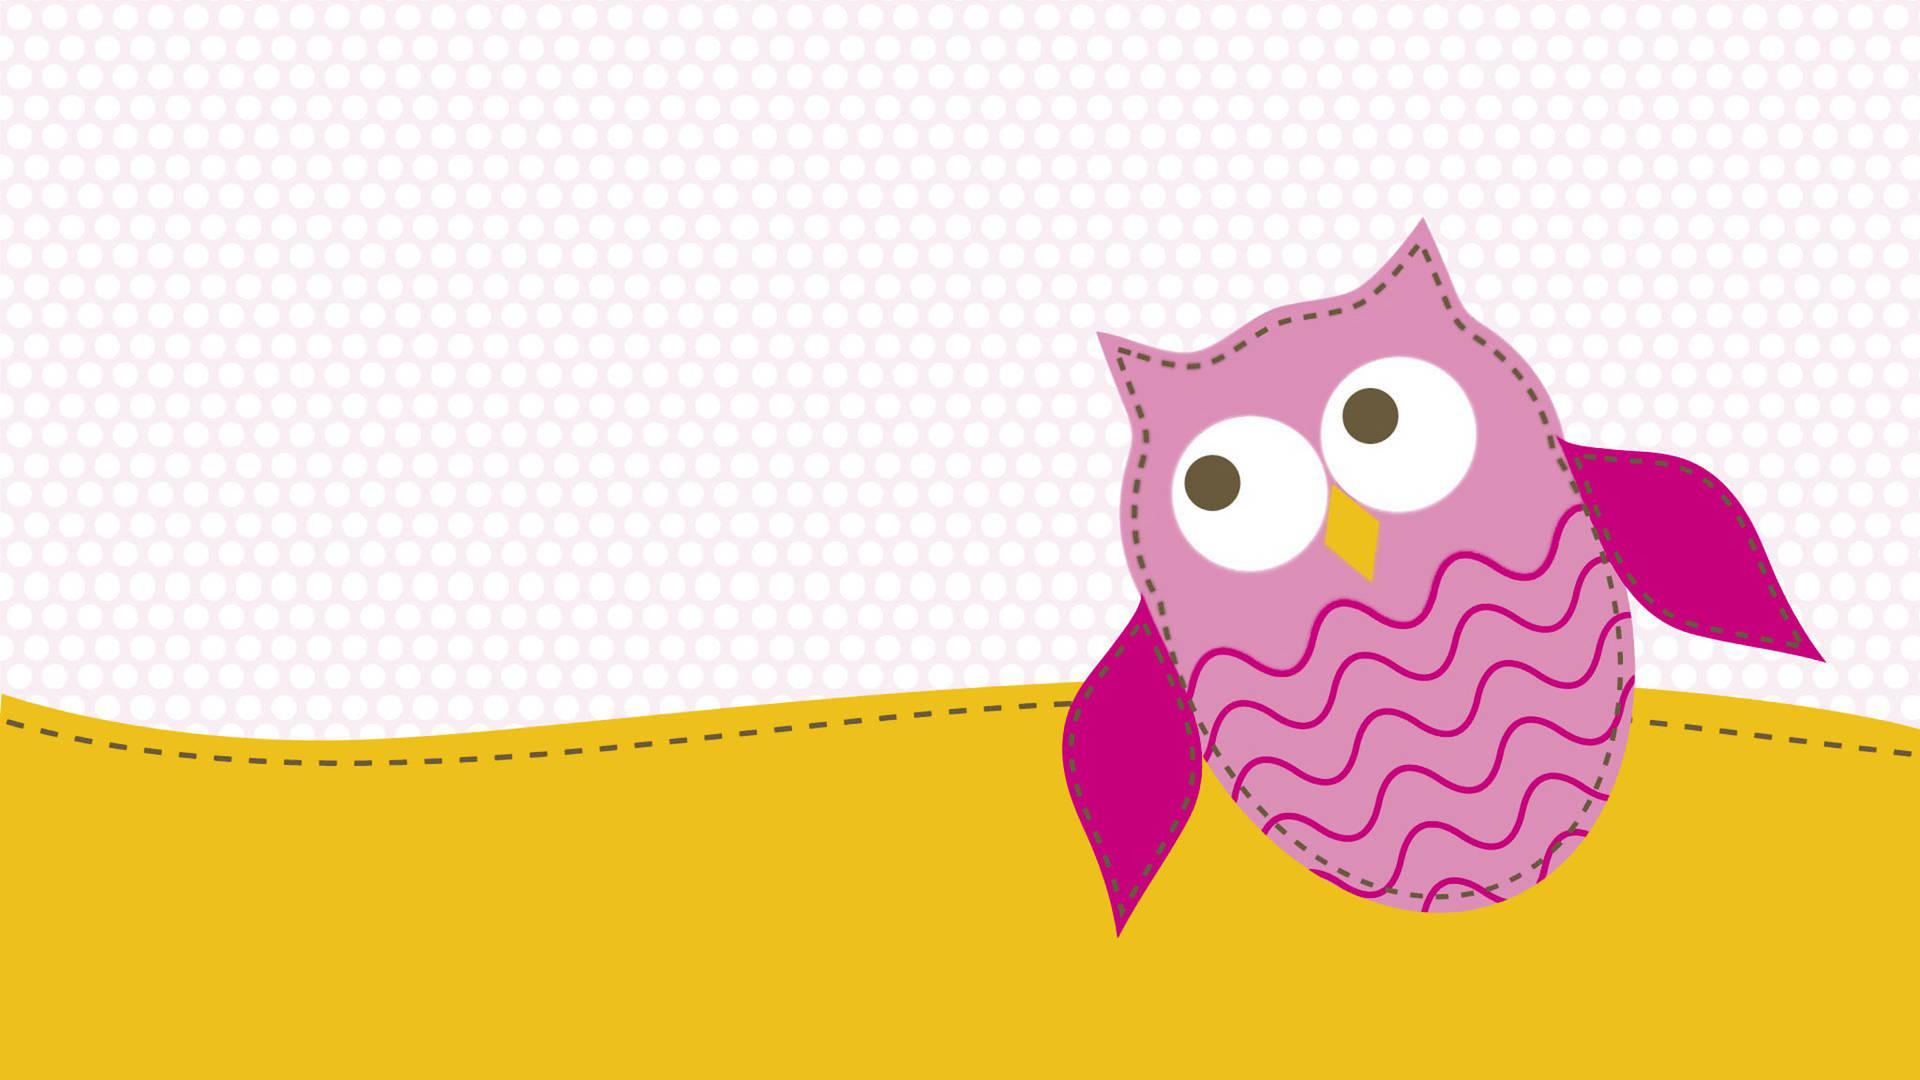 Cute Owl Hexagon Pattern Background